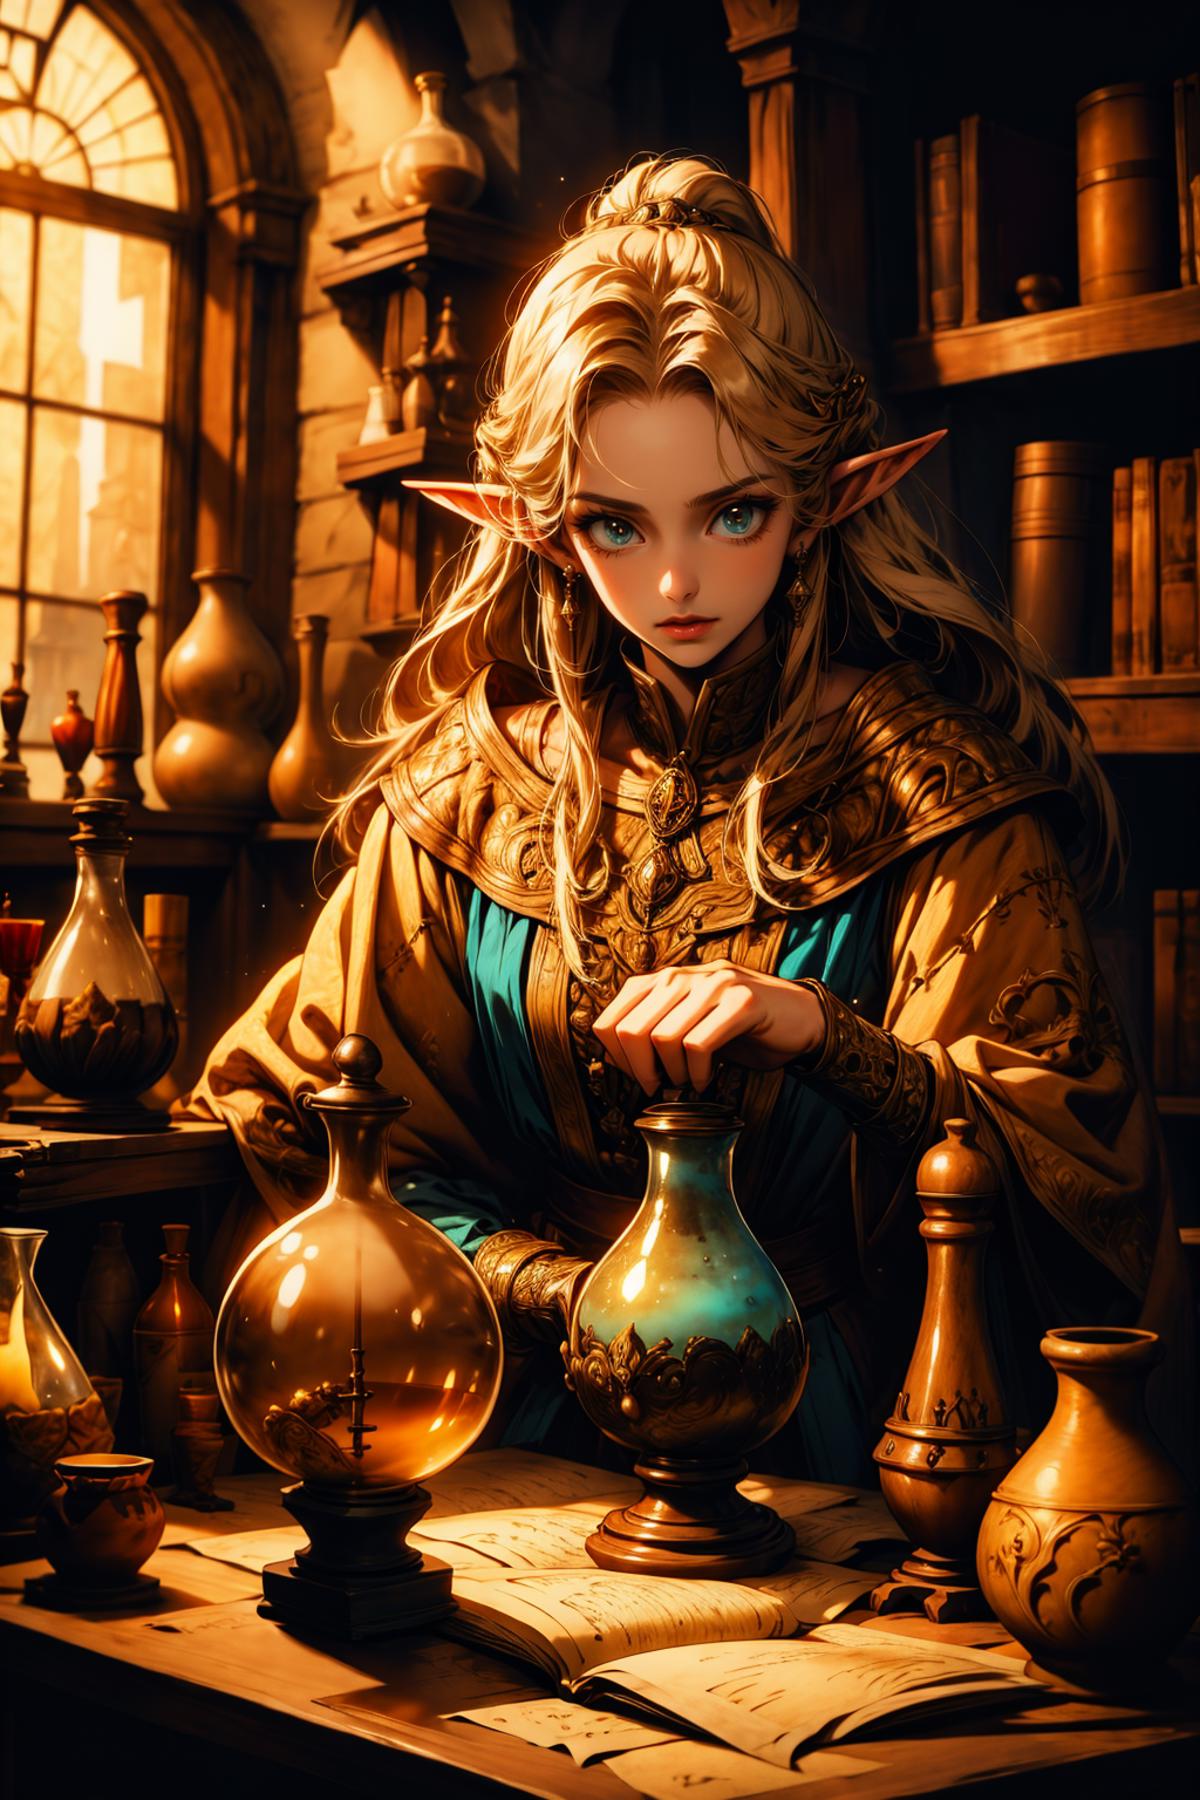 Renaissance Alchemist's Studio image by nullsync